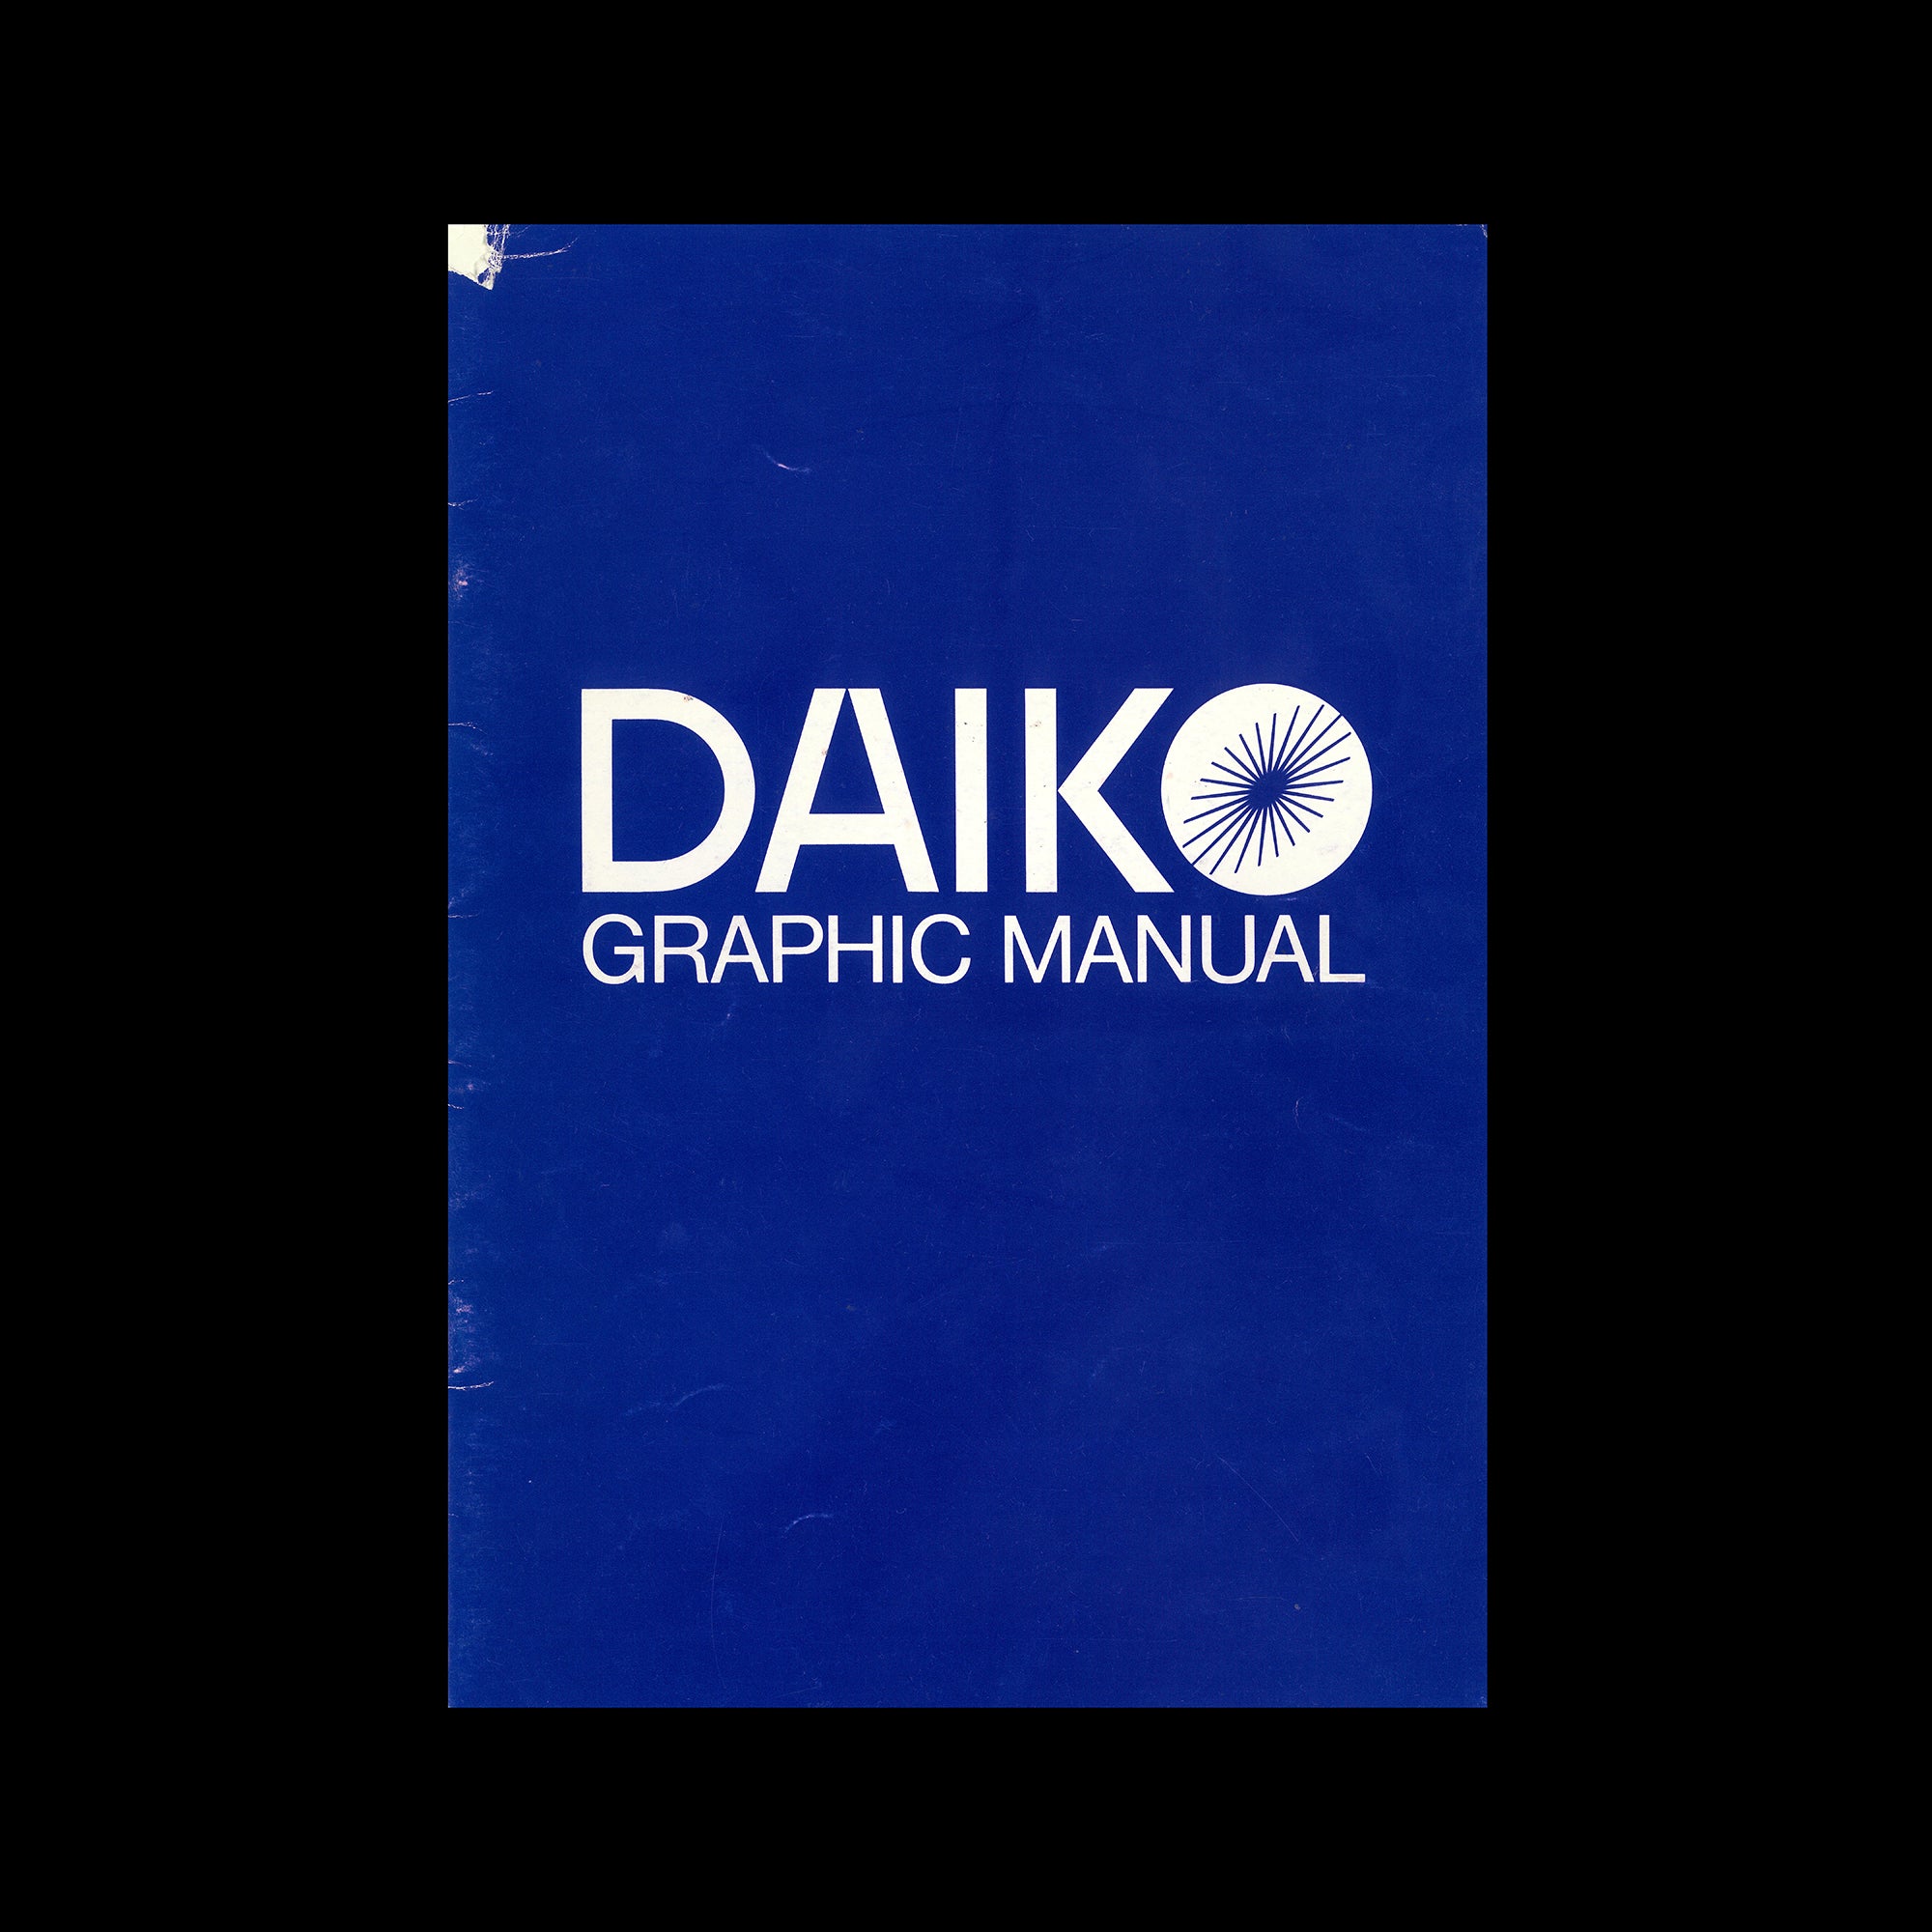 Daiko Graphic Manual, Ikko Tanaka, 1982